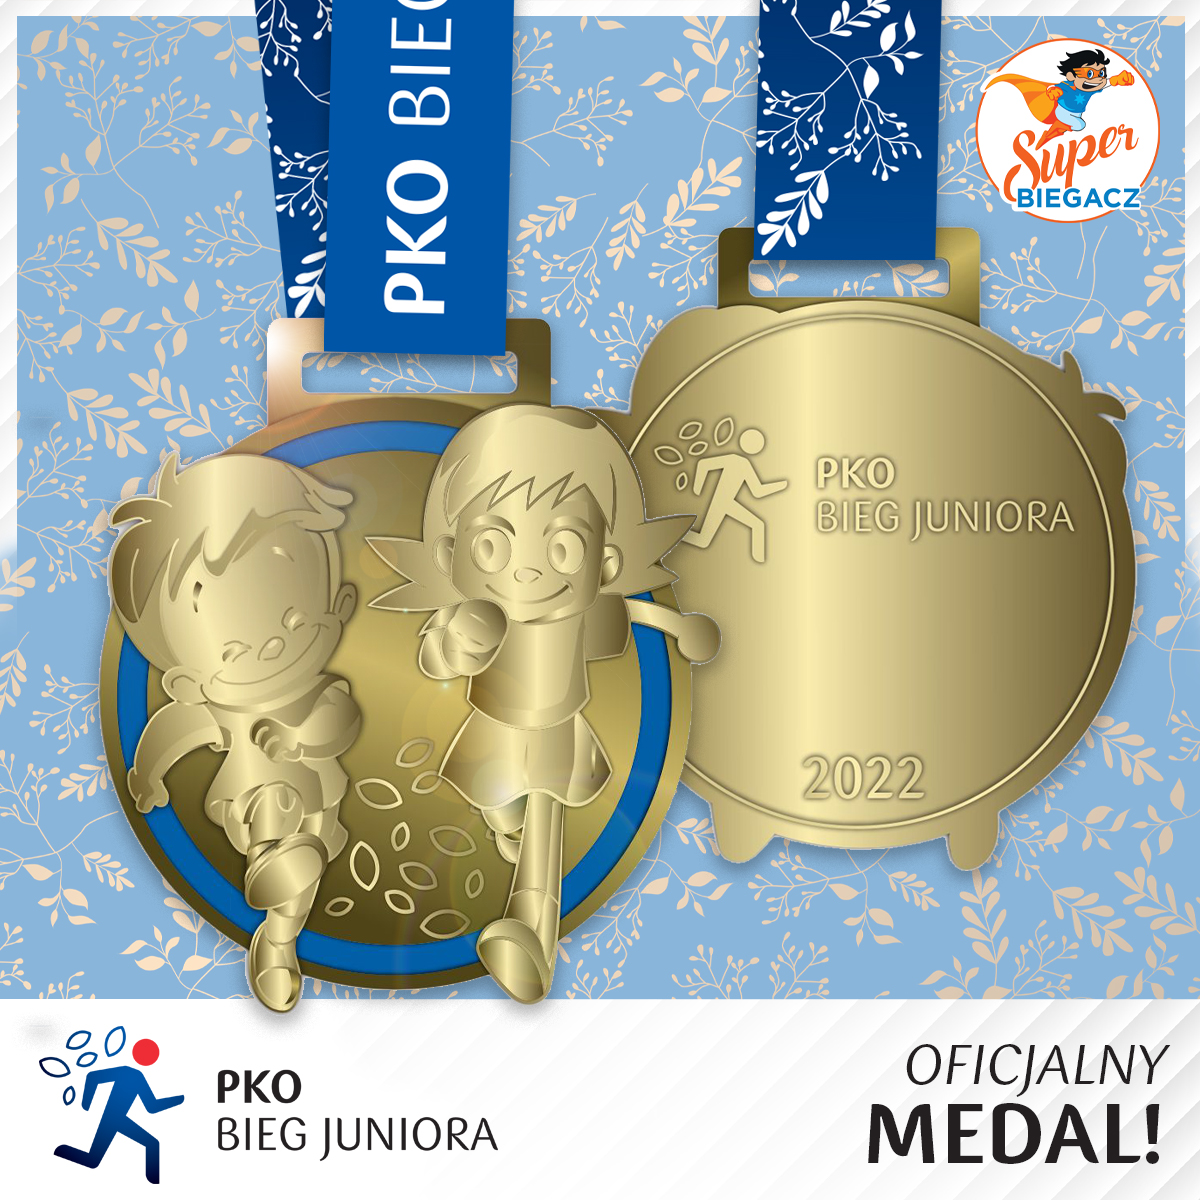 Oficjalny medal PKO Bieg Juniora!